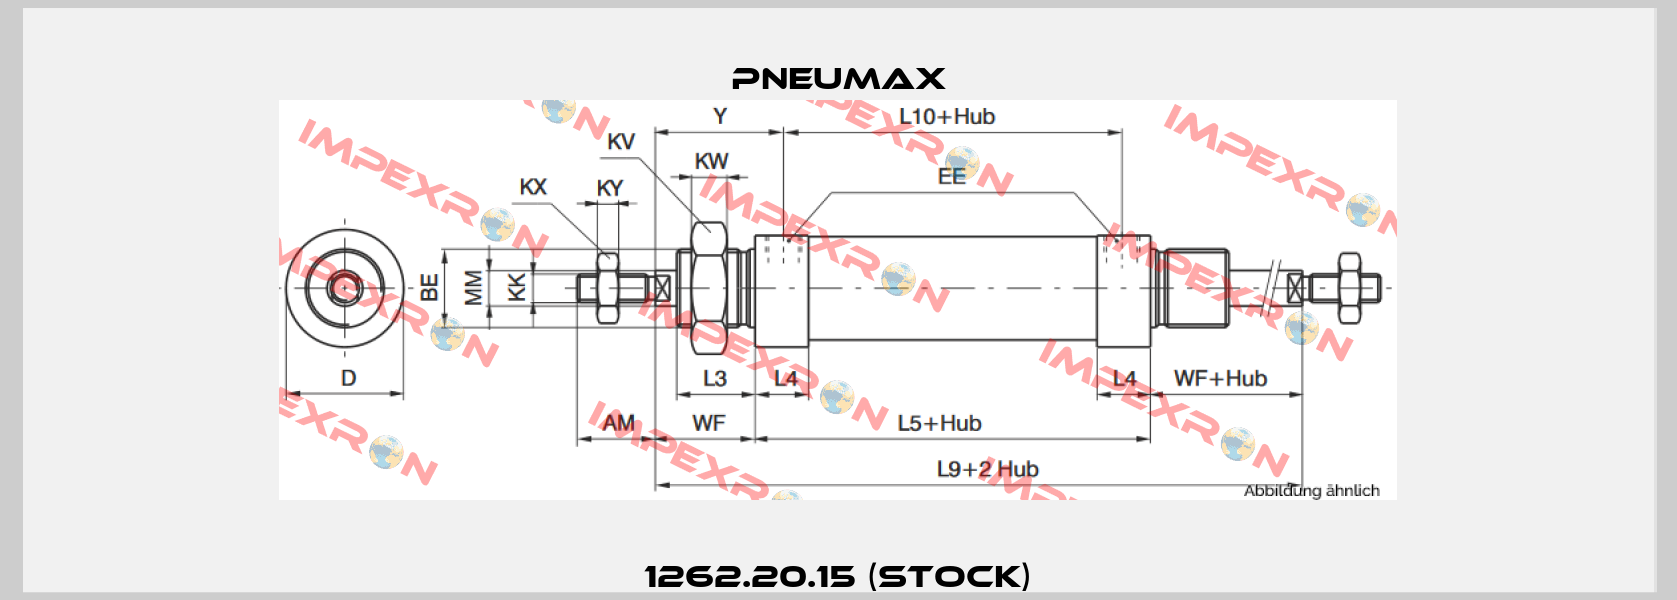 1262.20.15 (stock) Pneumax